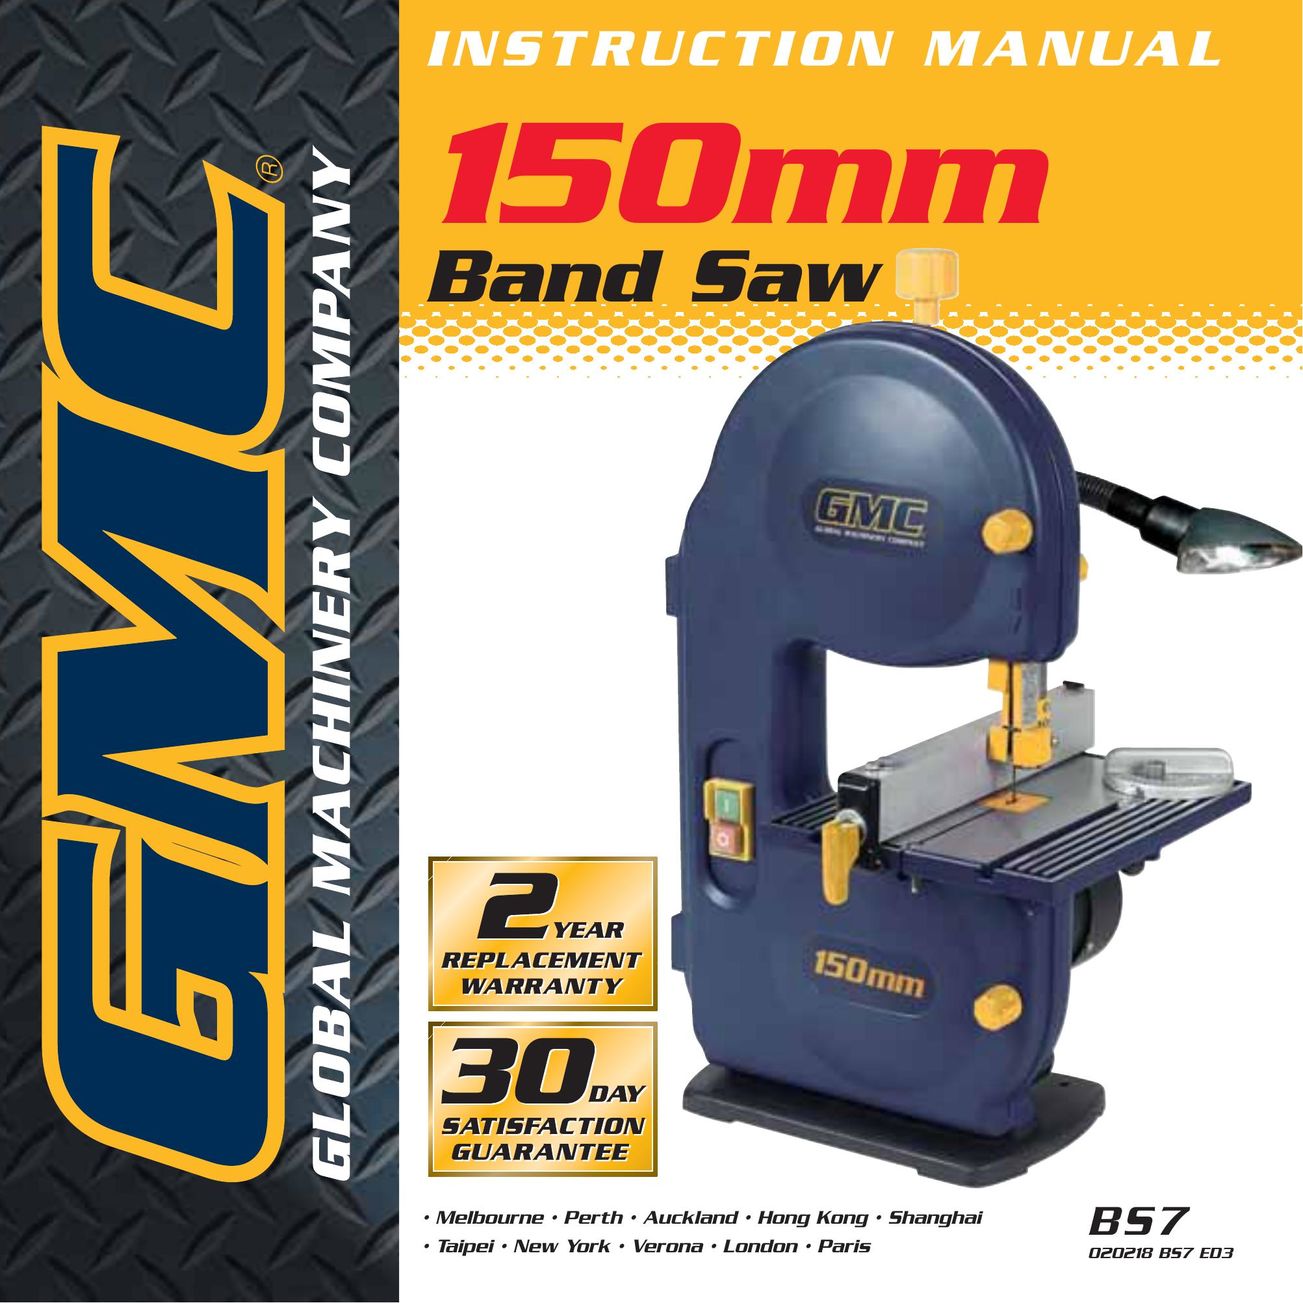 Global Machinery Company BS7 Saw User Manual